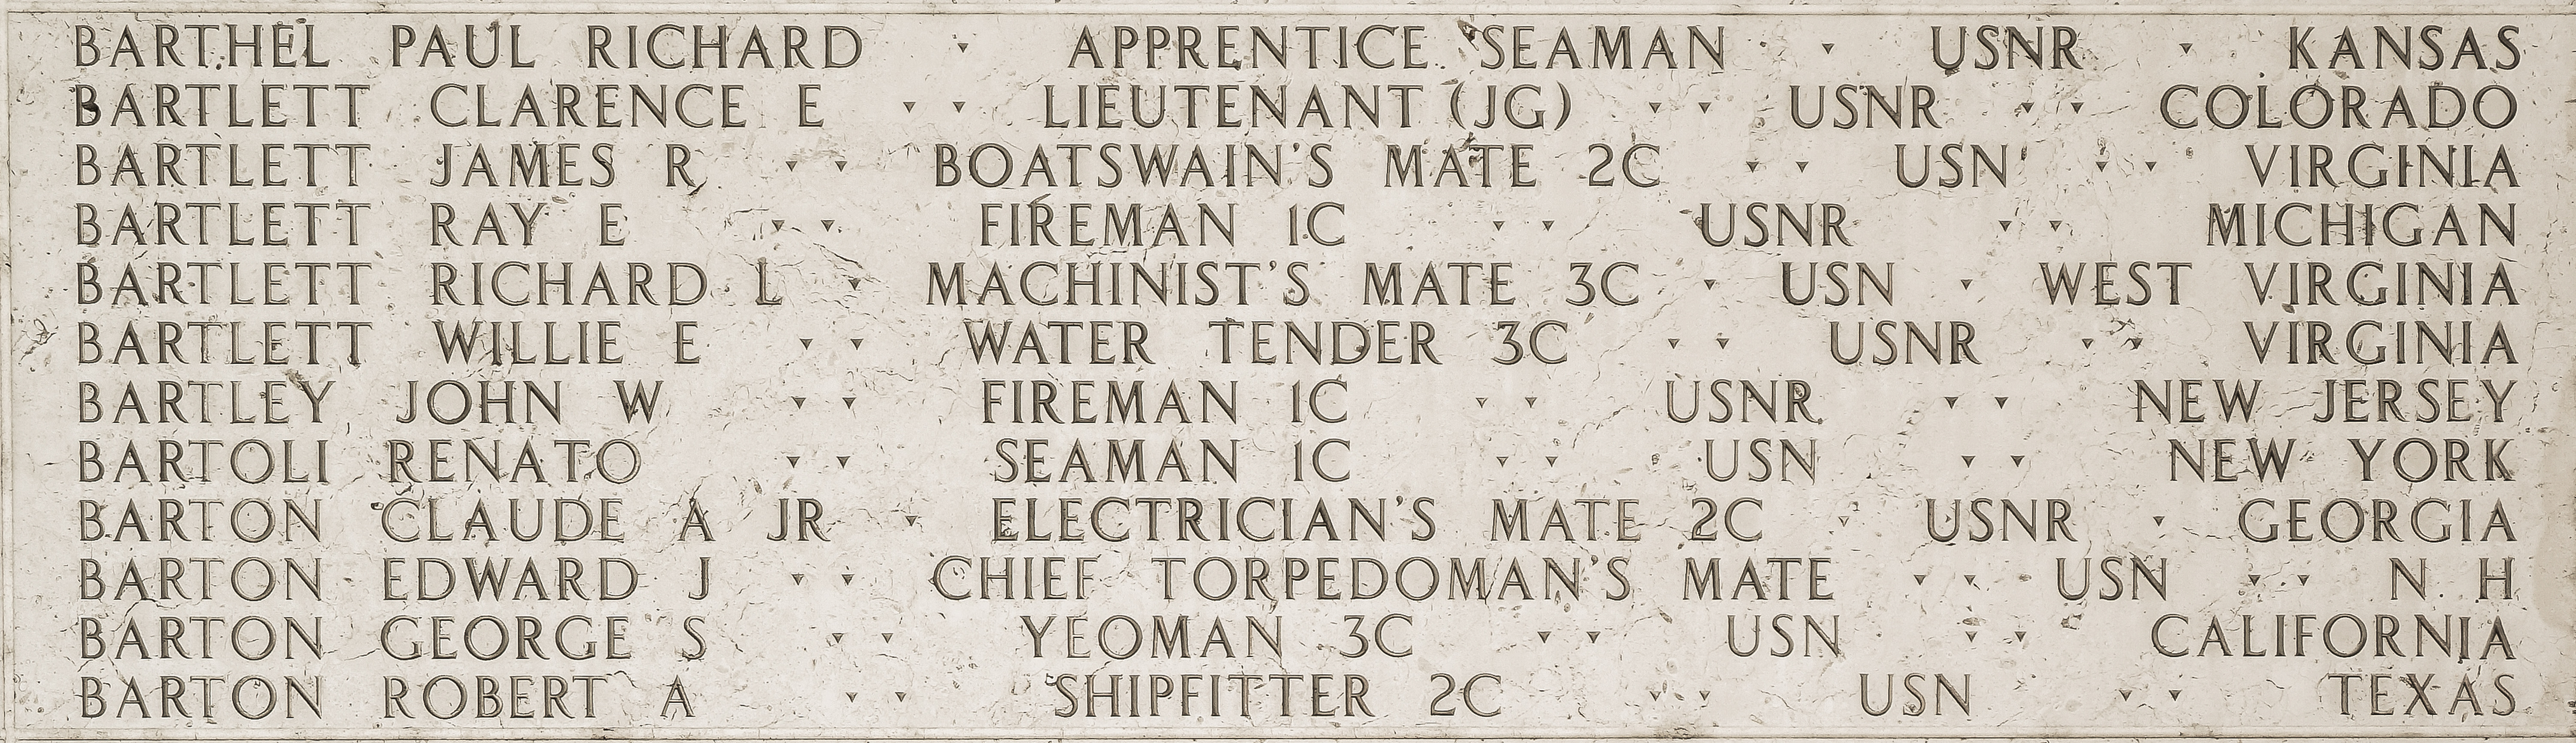 Paul Richard Barthel, Seaman Apprentice